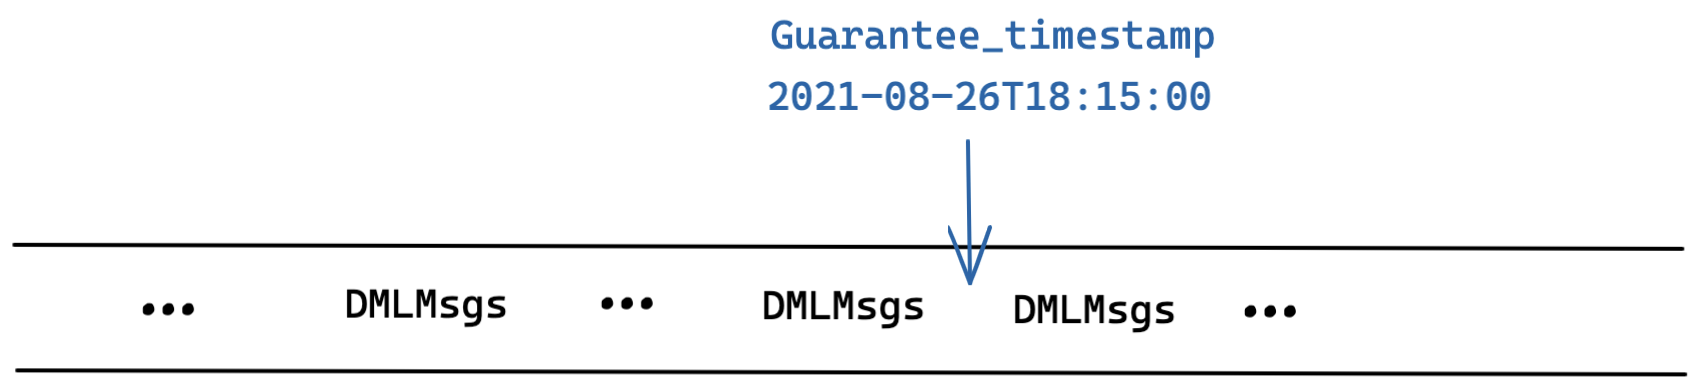 Guarantee_Timestamp